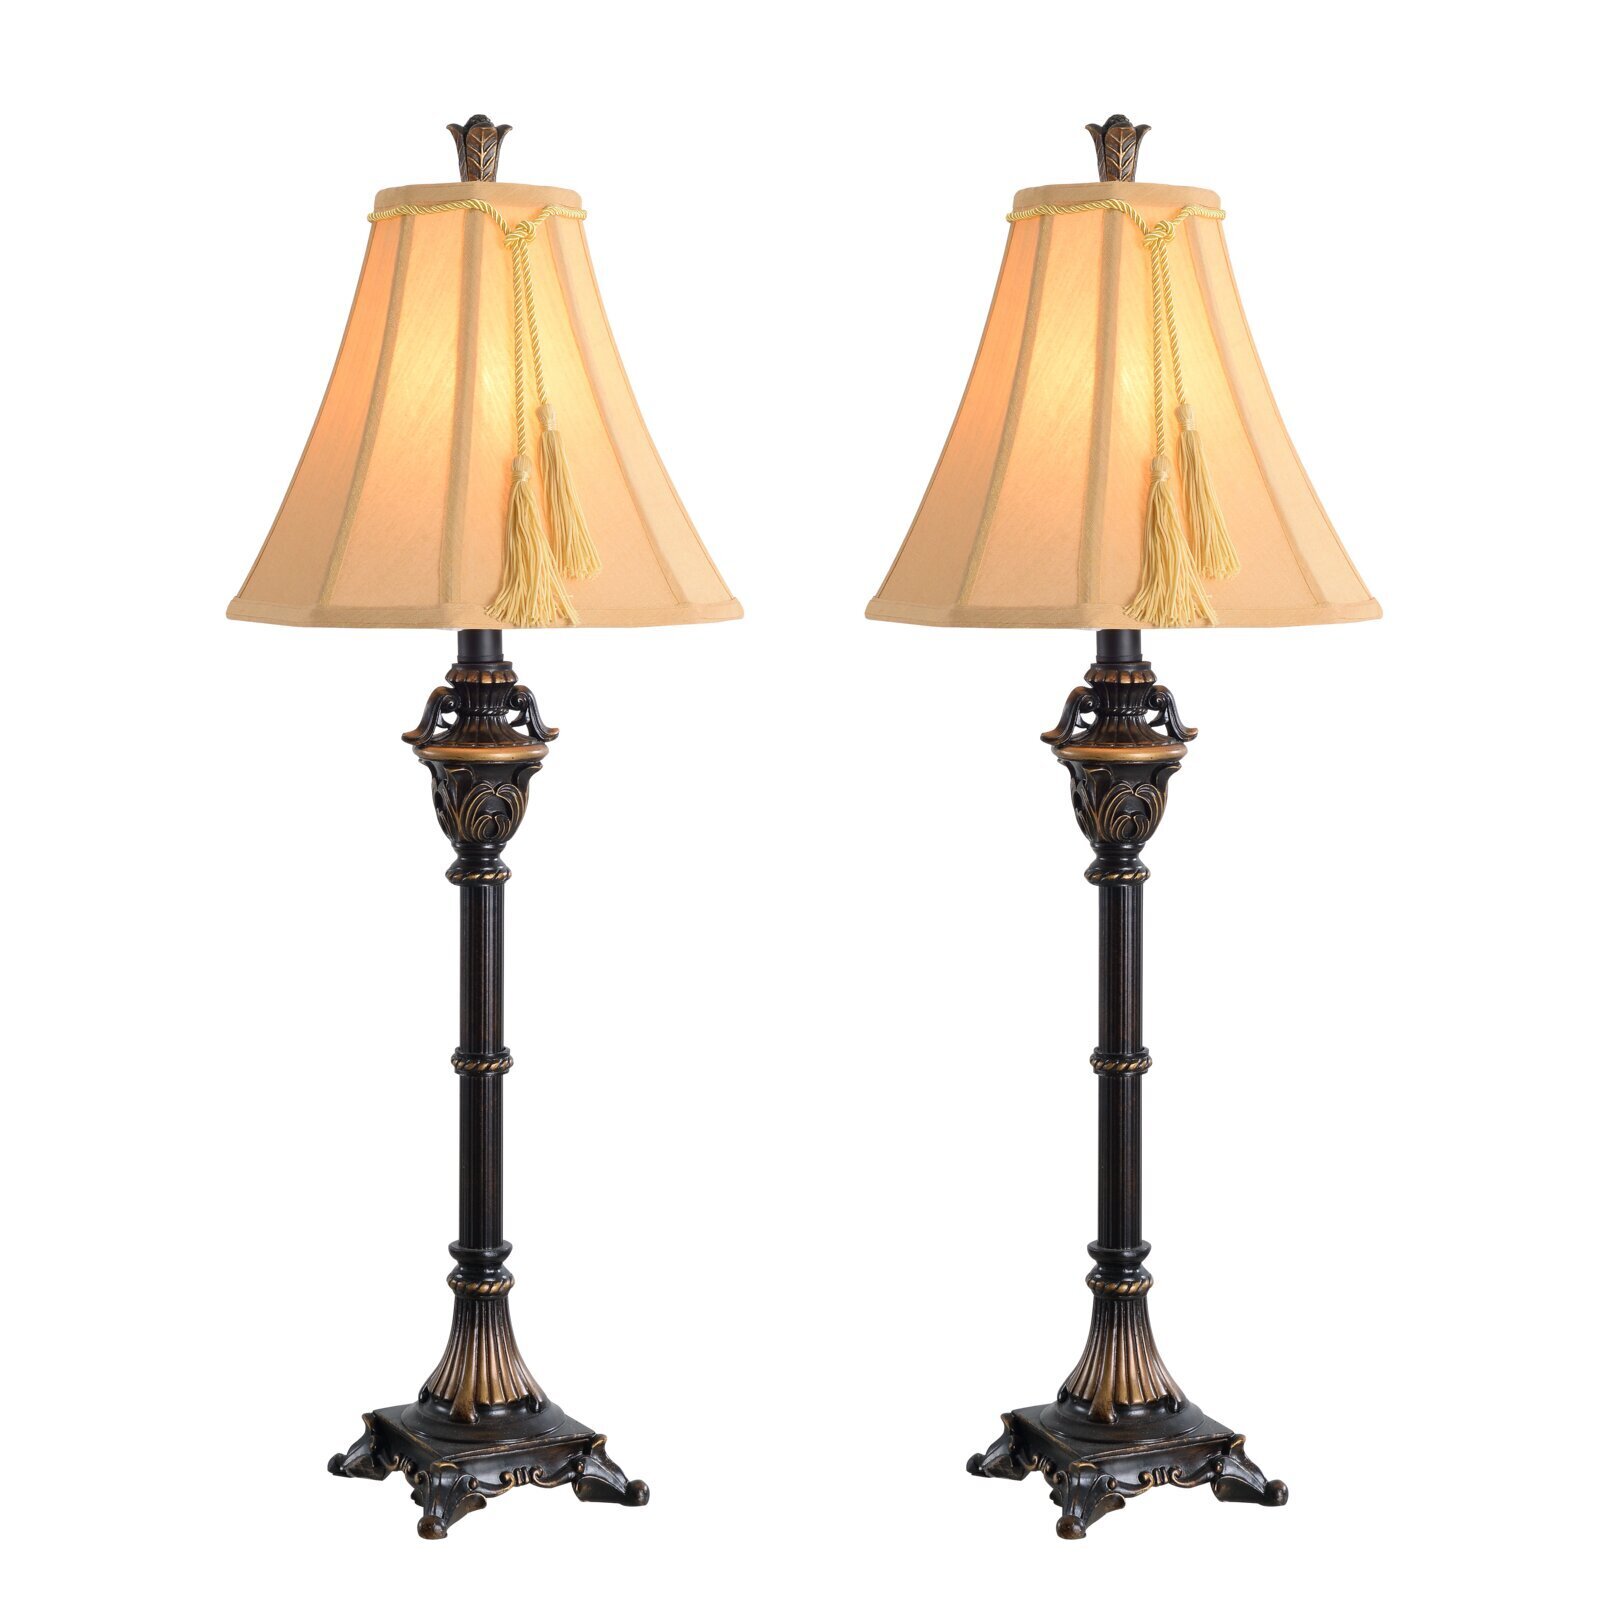 Detailed Bronze Tall Skinny Lamp